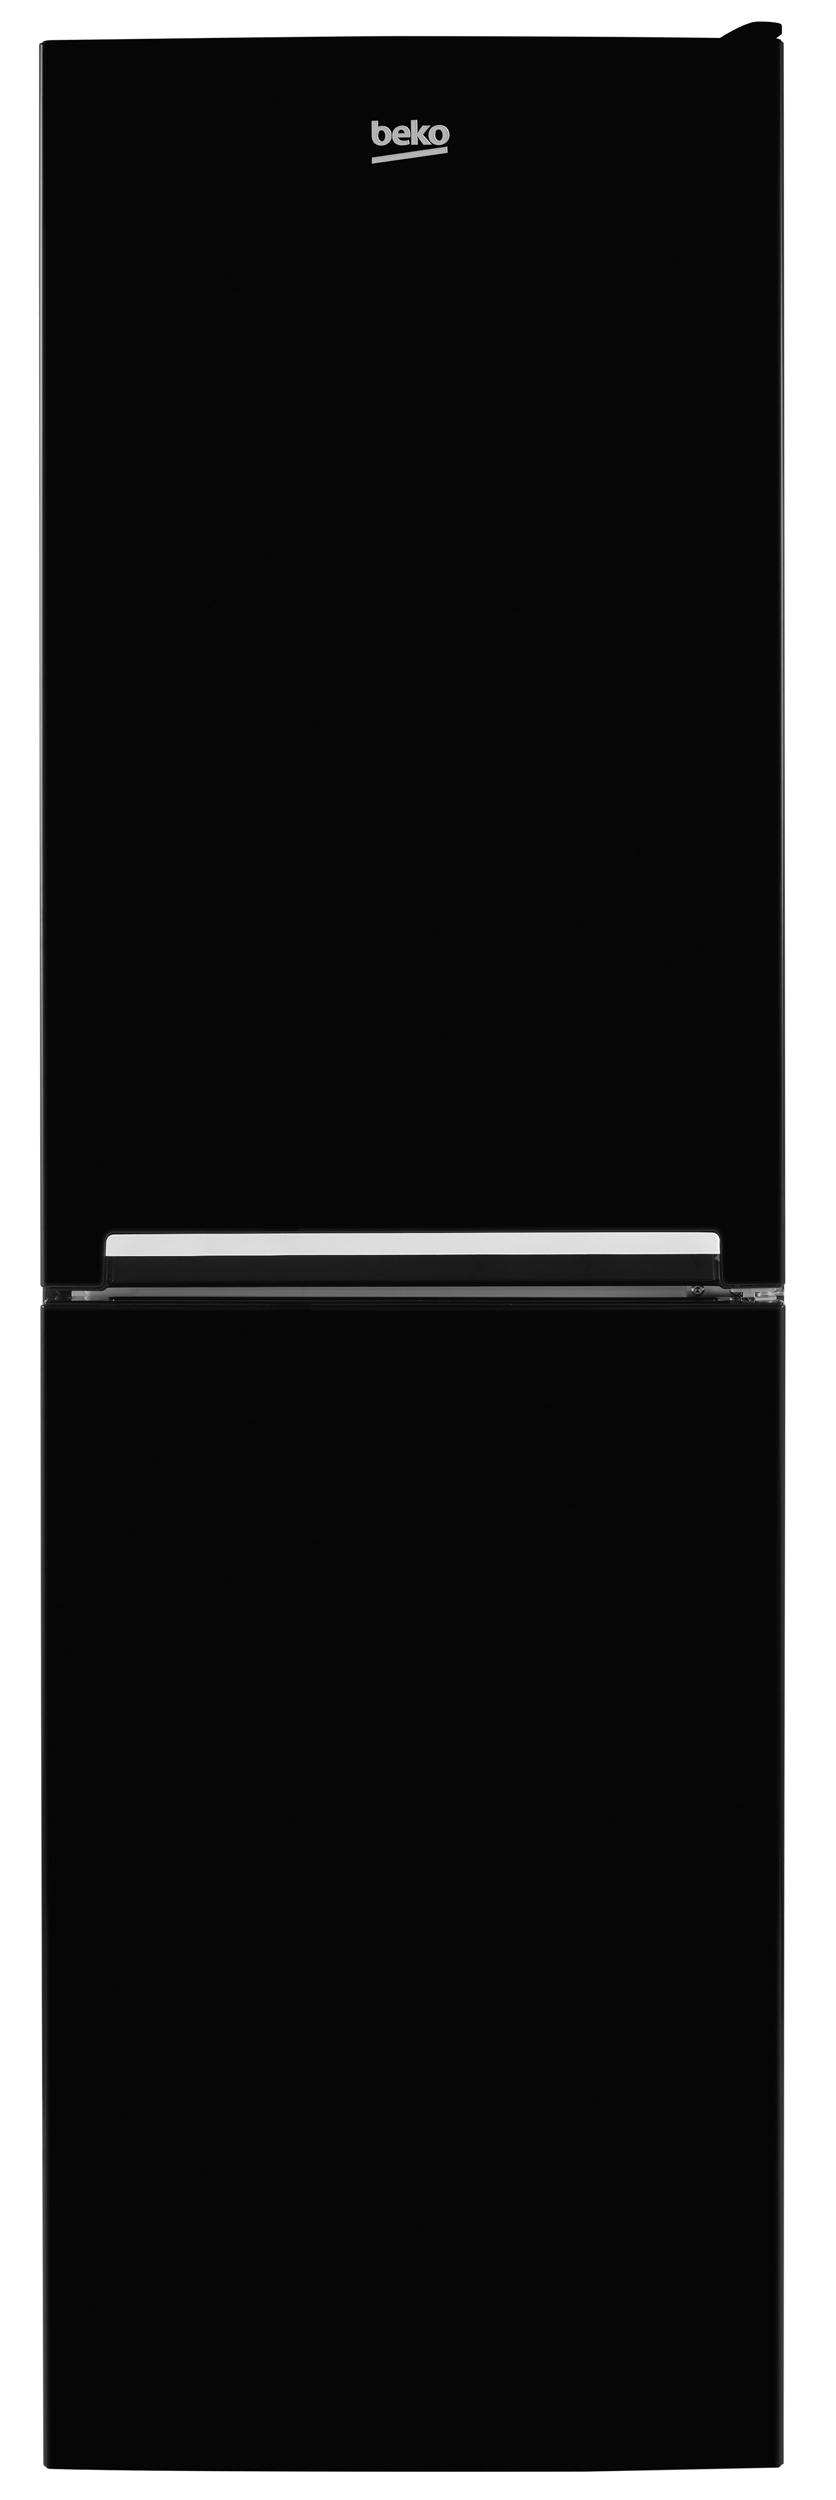 Beko CSG3582B Freestanding Combi Fridge Freezer-Black